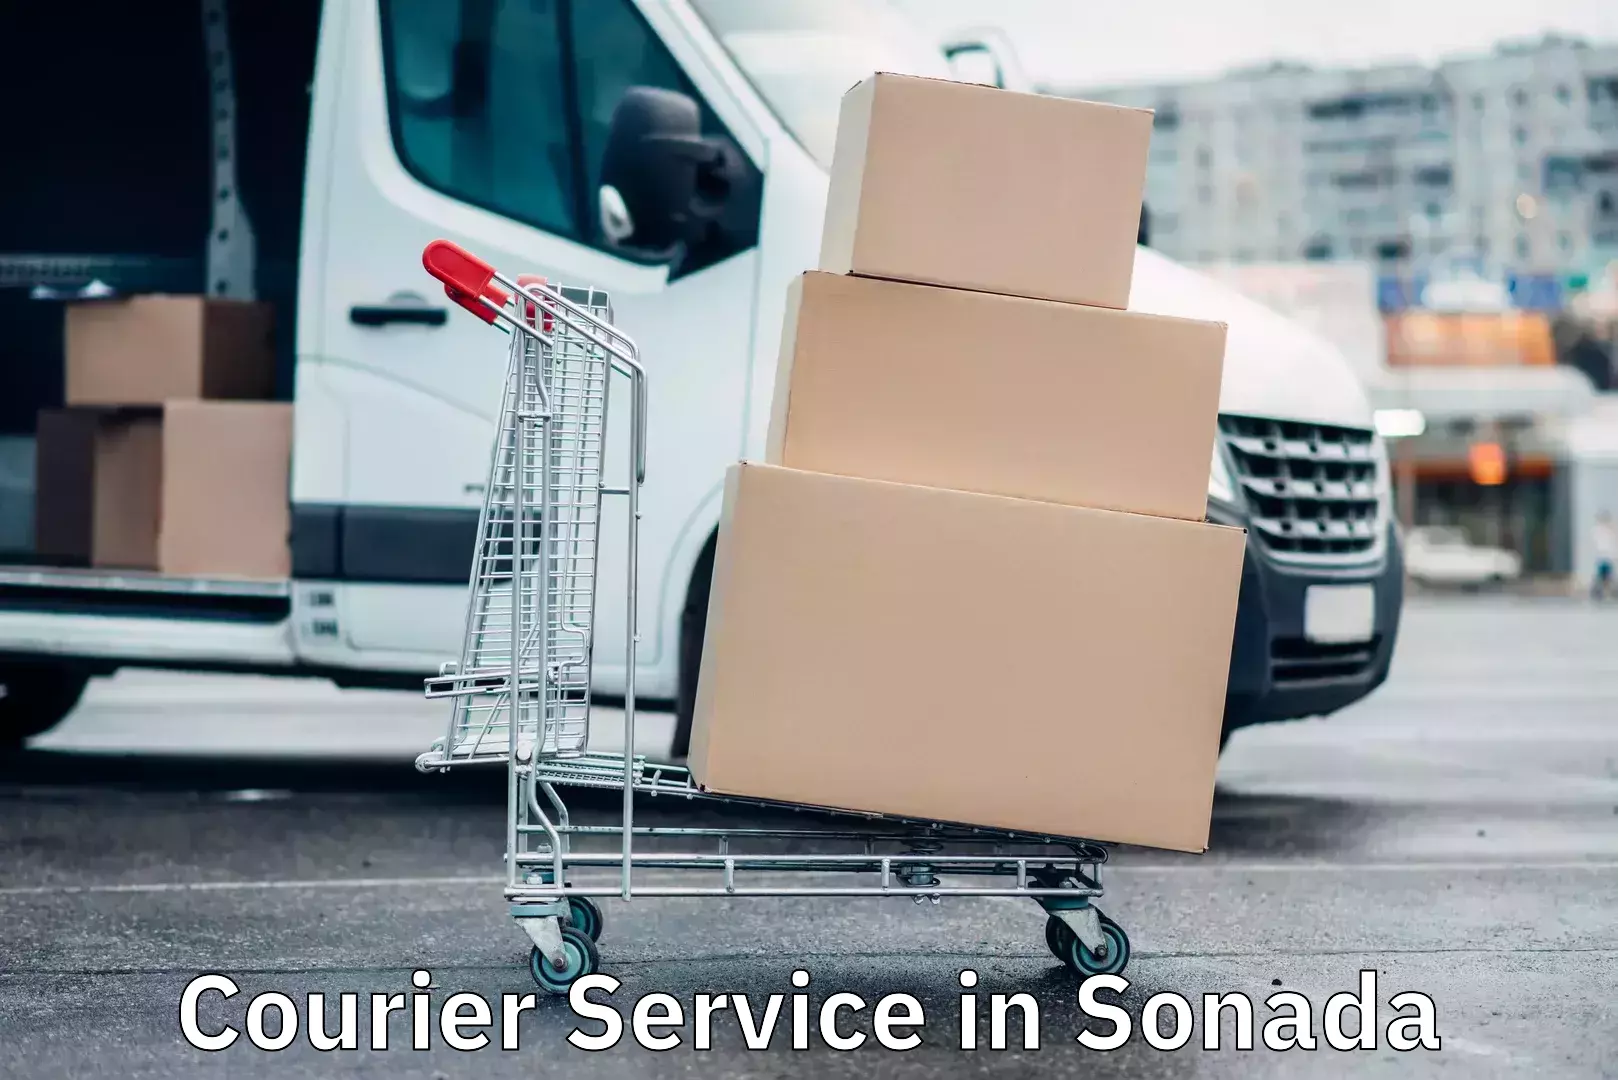 Seamless shipping service in Sonada